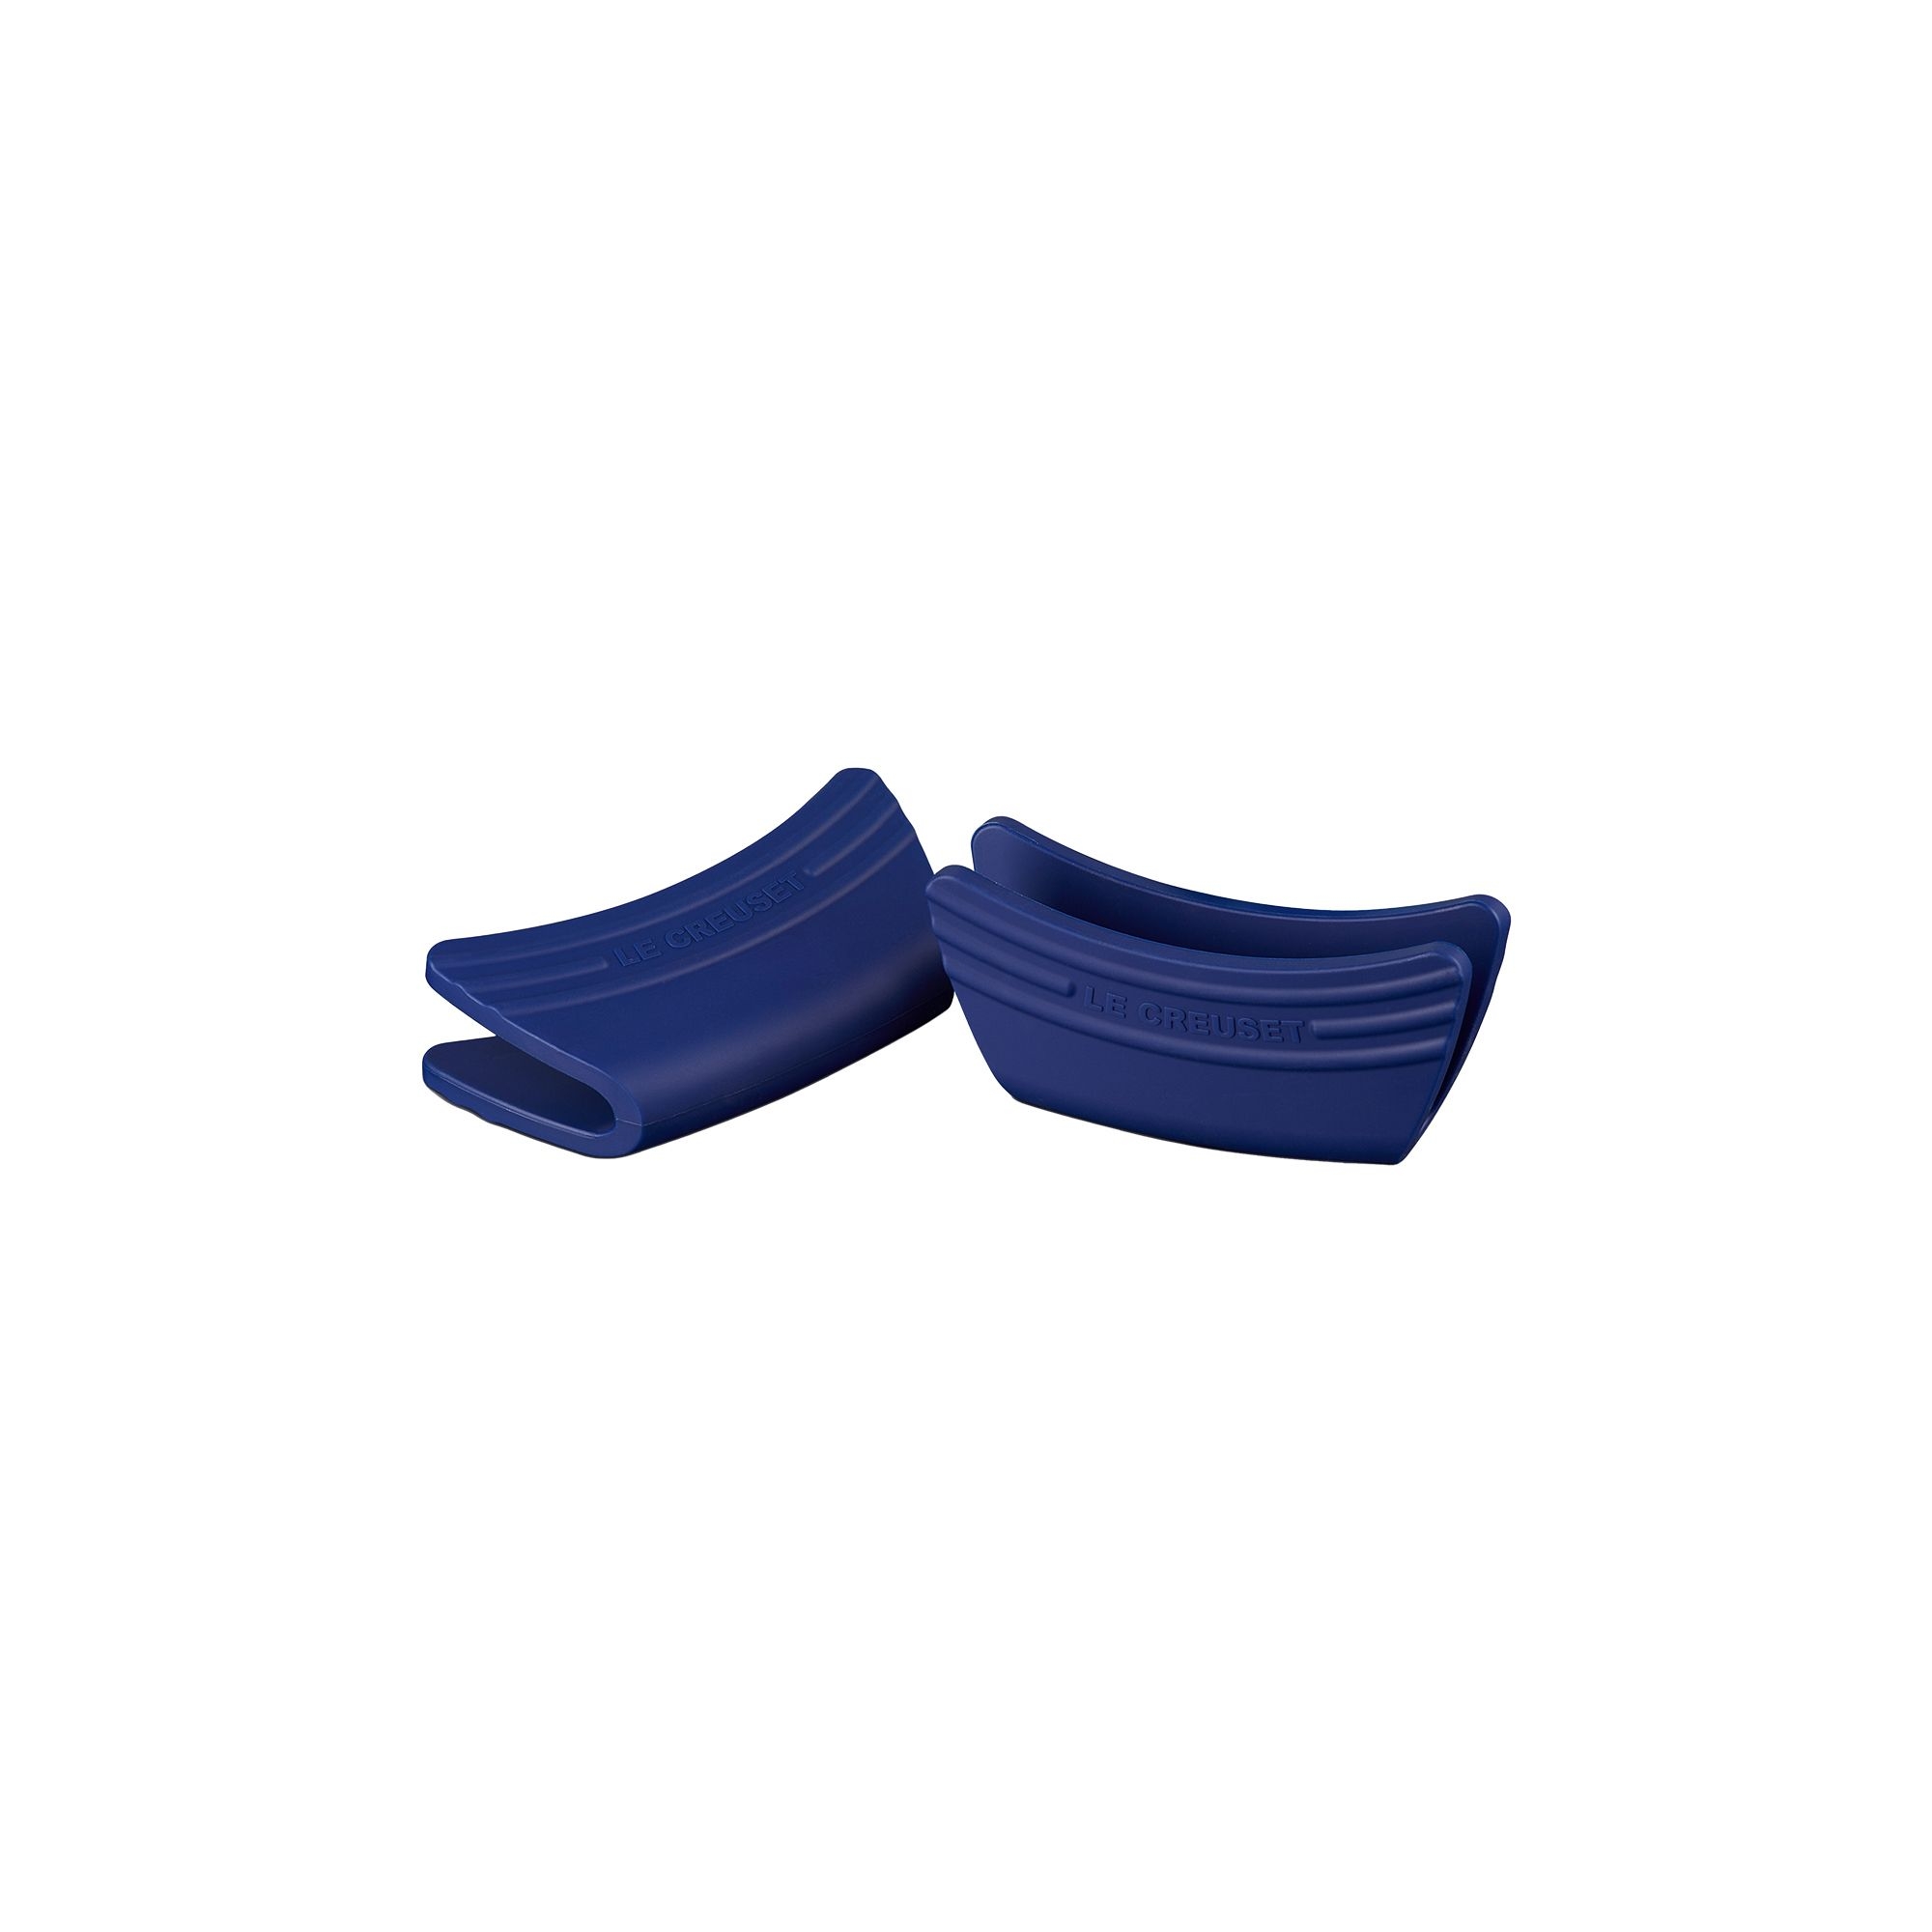 Le Creuset Silicone Handle Grip Set of 2 Azure Blue Image 1